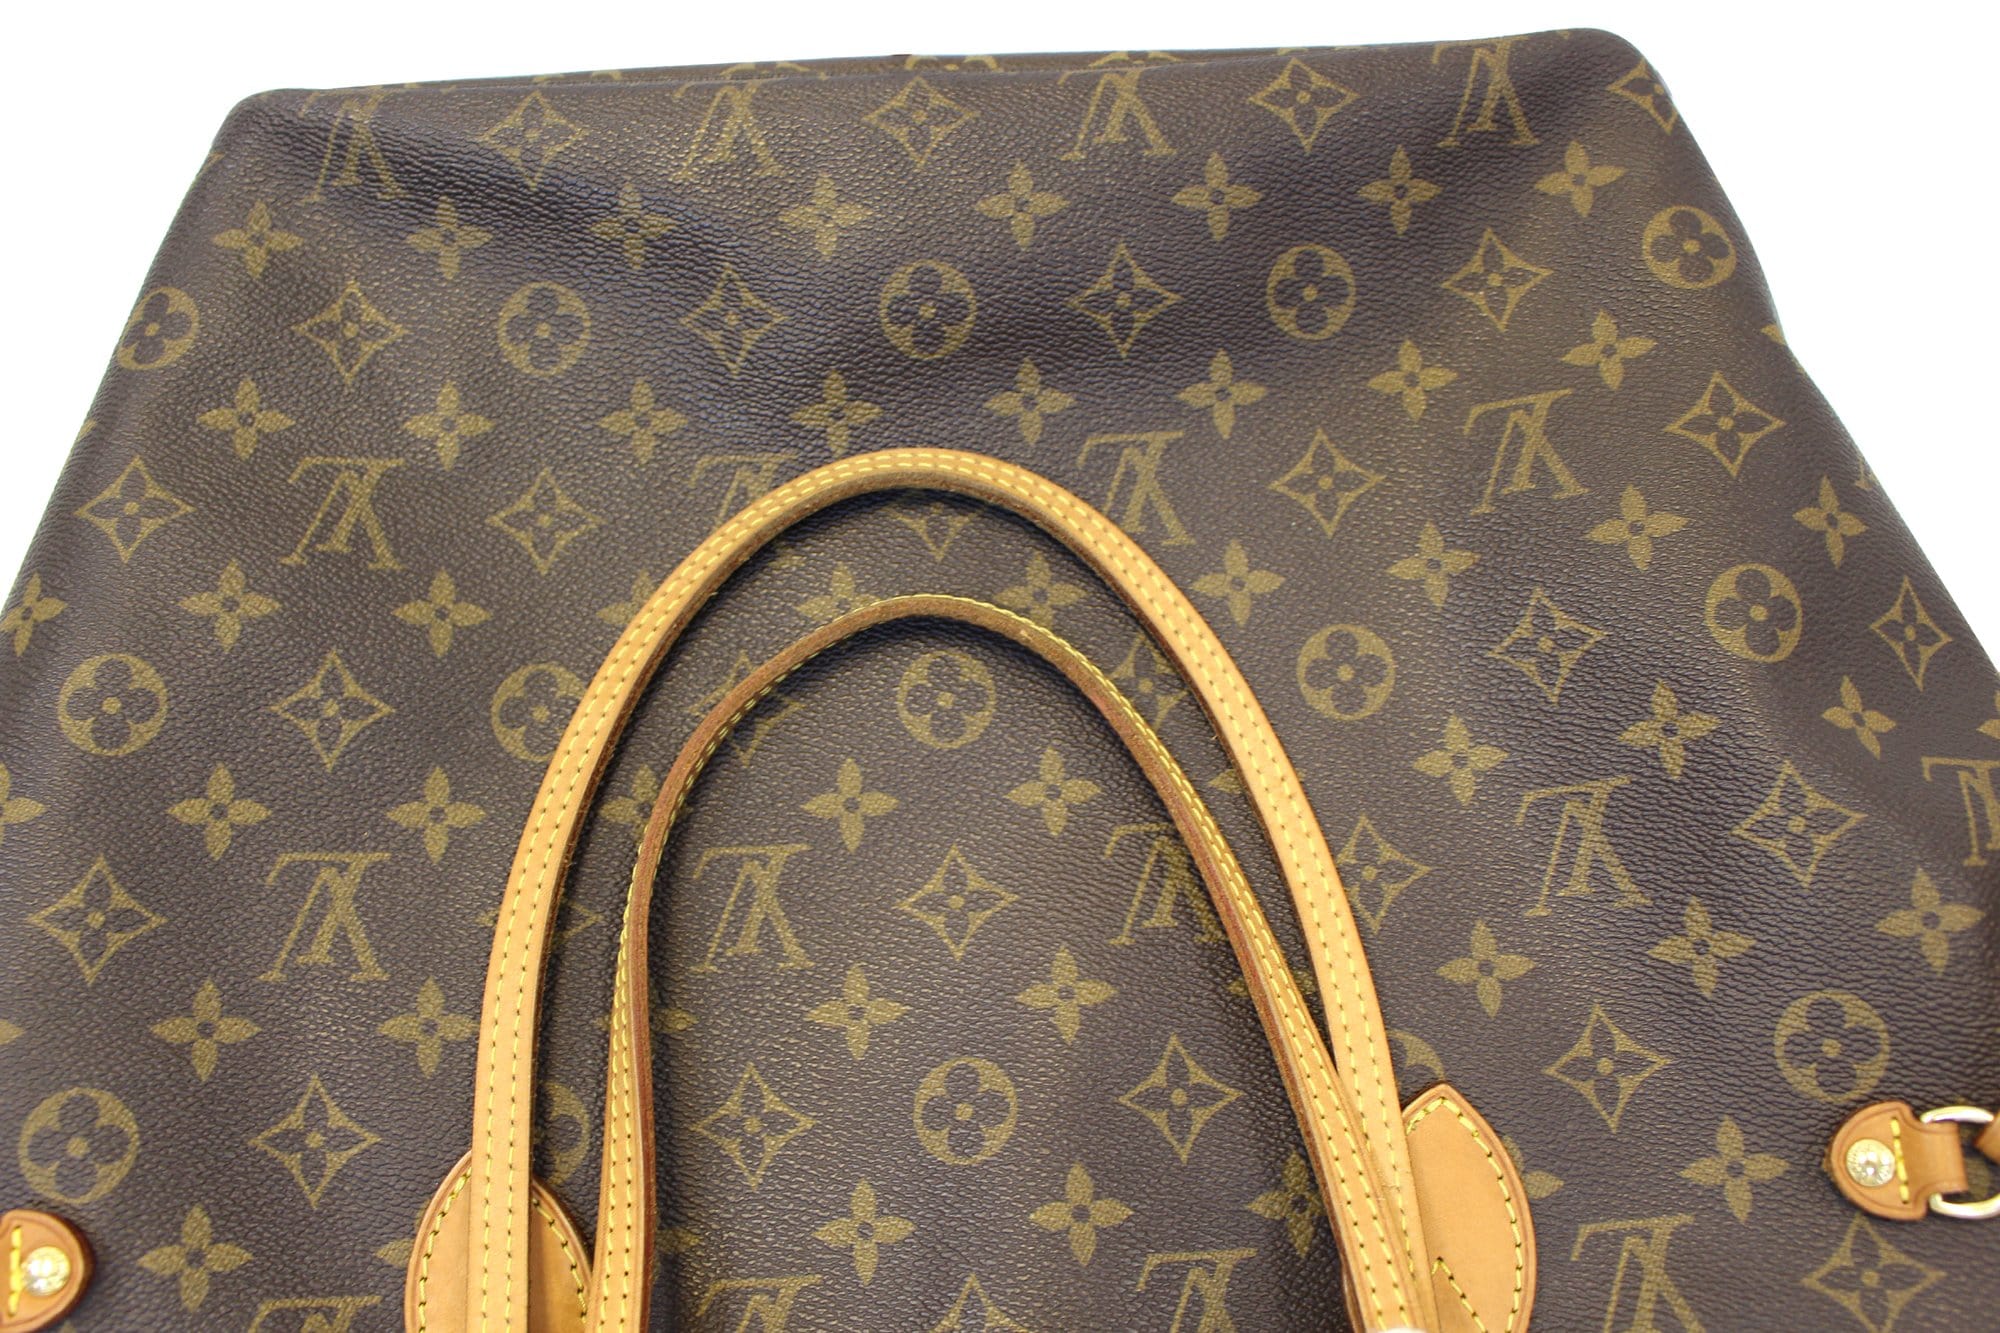 🌸 Louis Vuitton Artsy MM Monogram Shoulder Bag Tote Purse (GI4181) +  Receipt 🌸